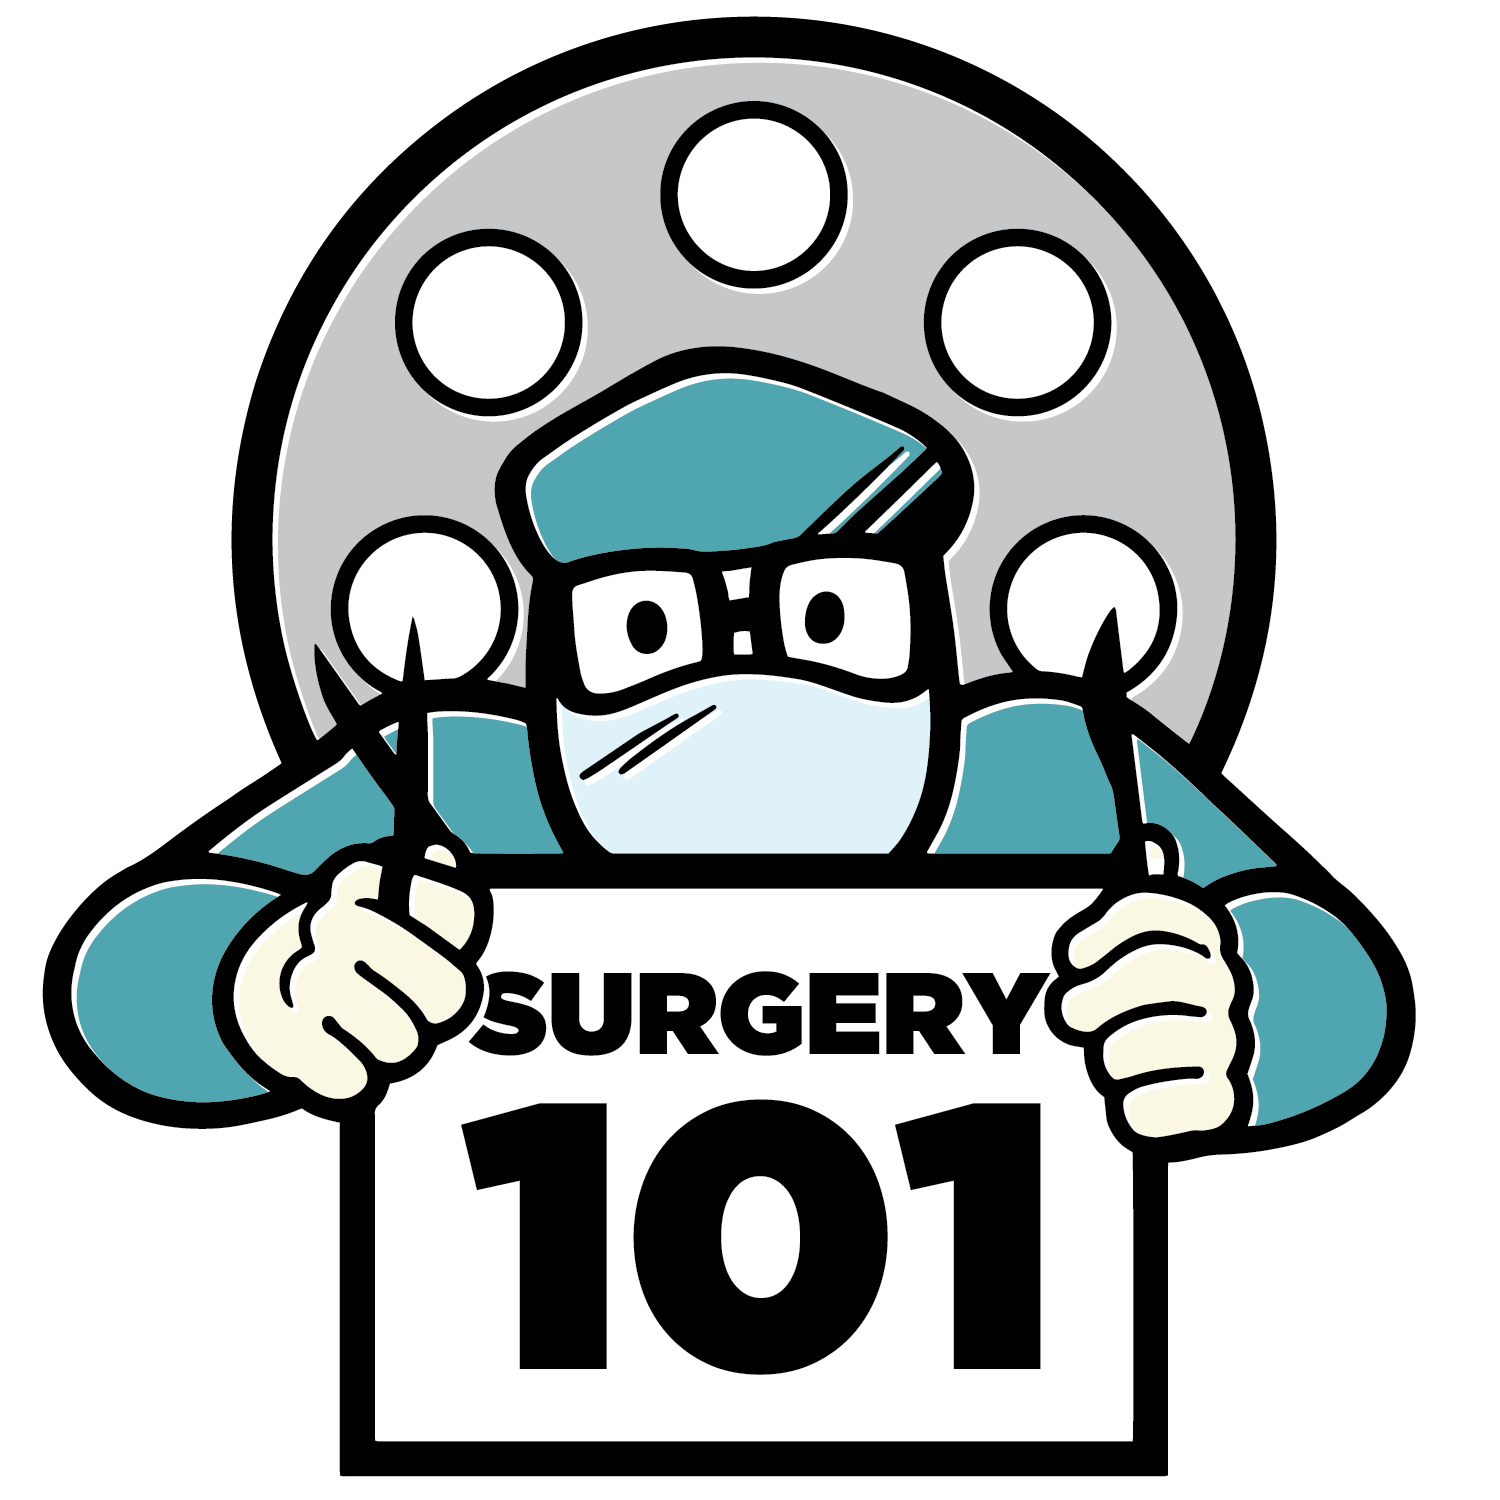 Surgery 101